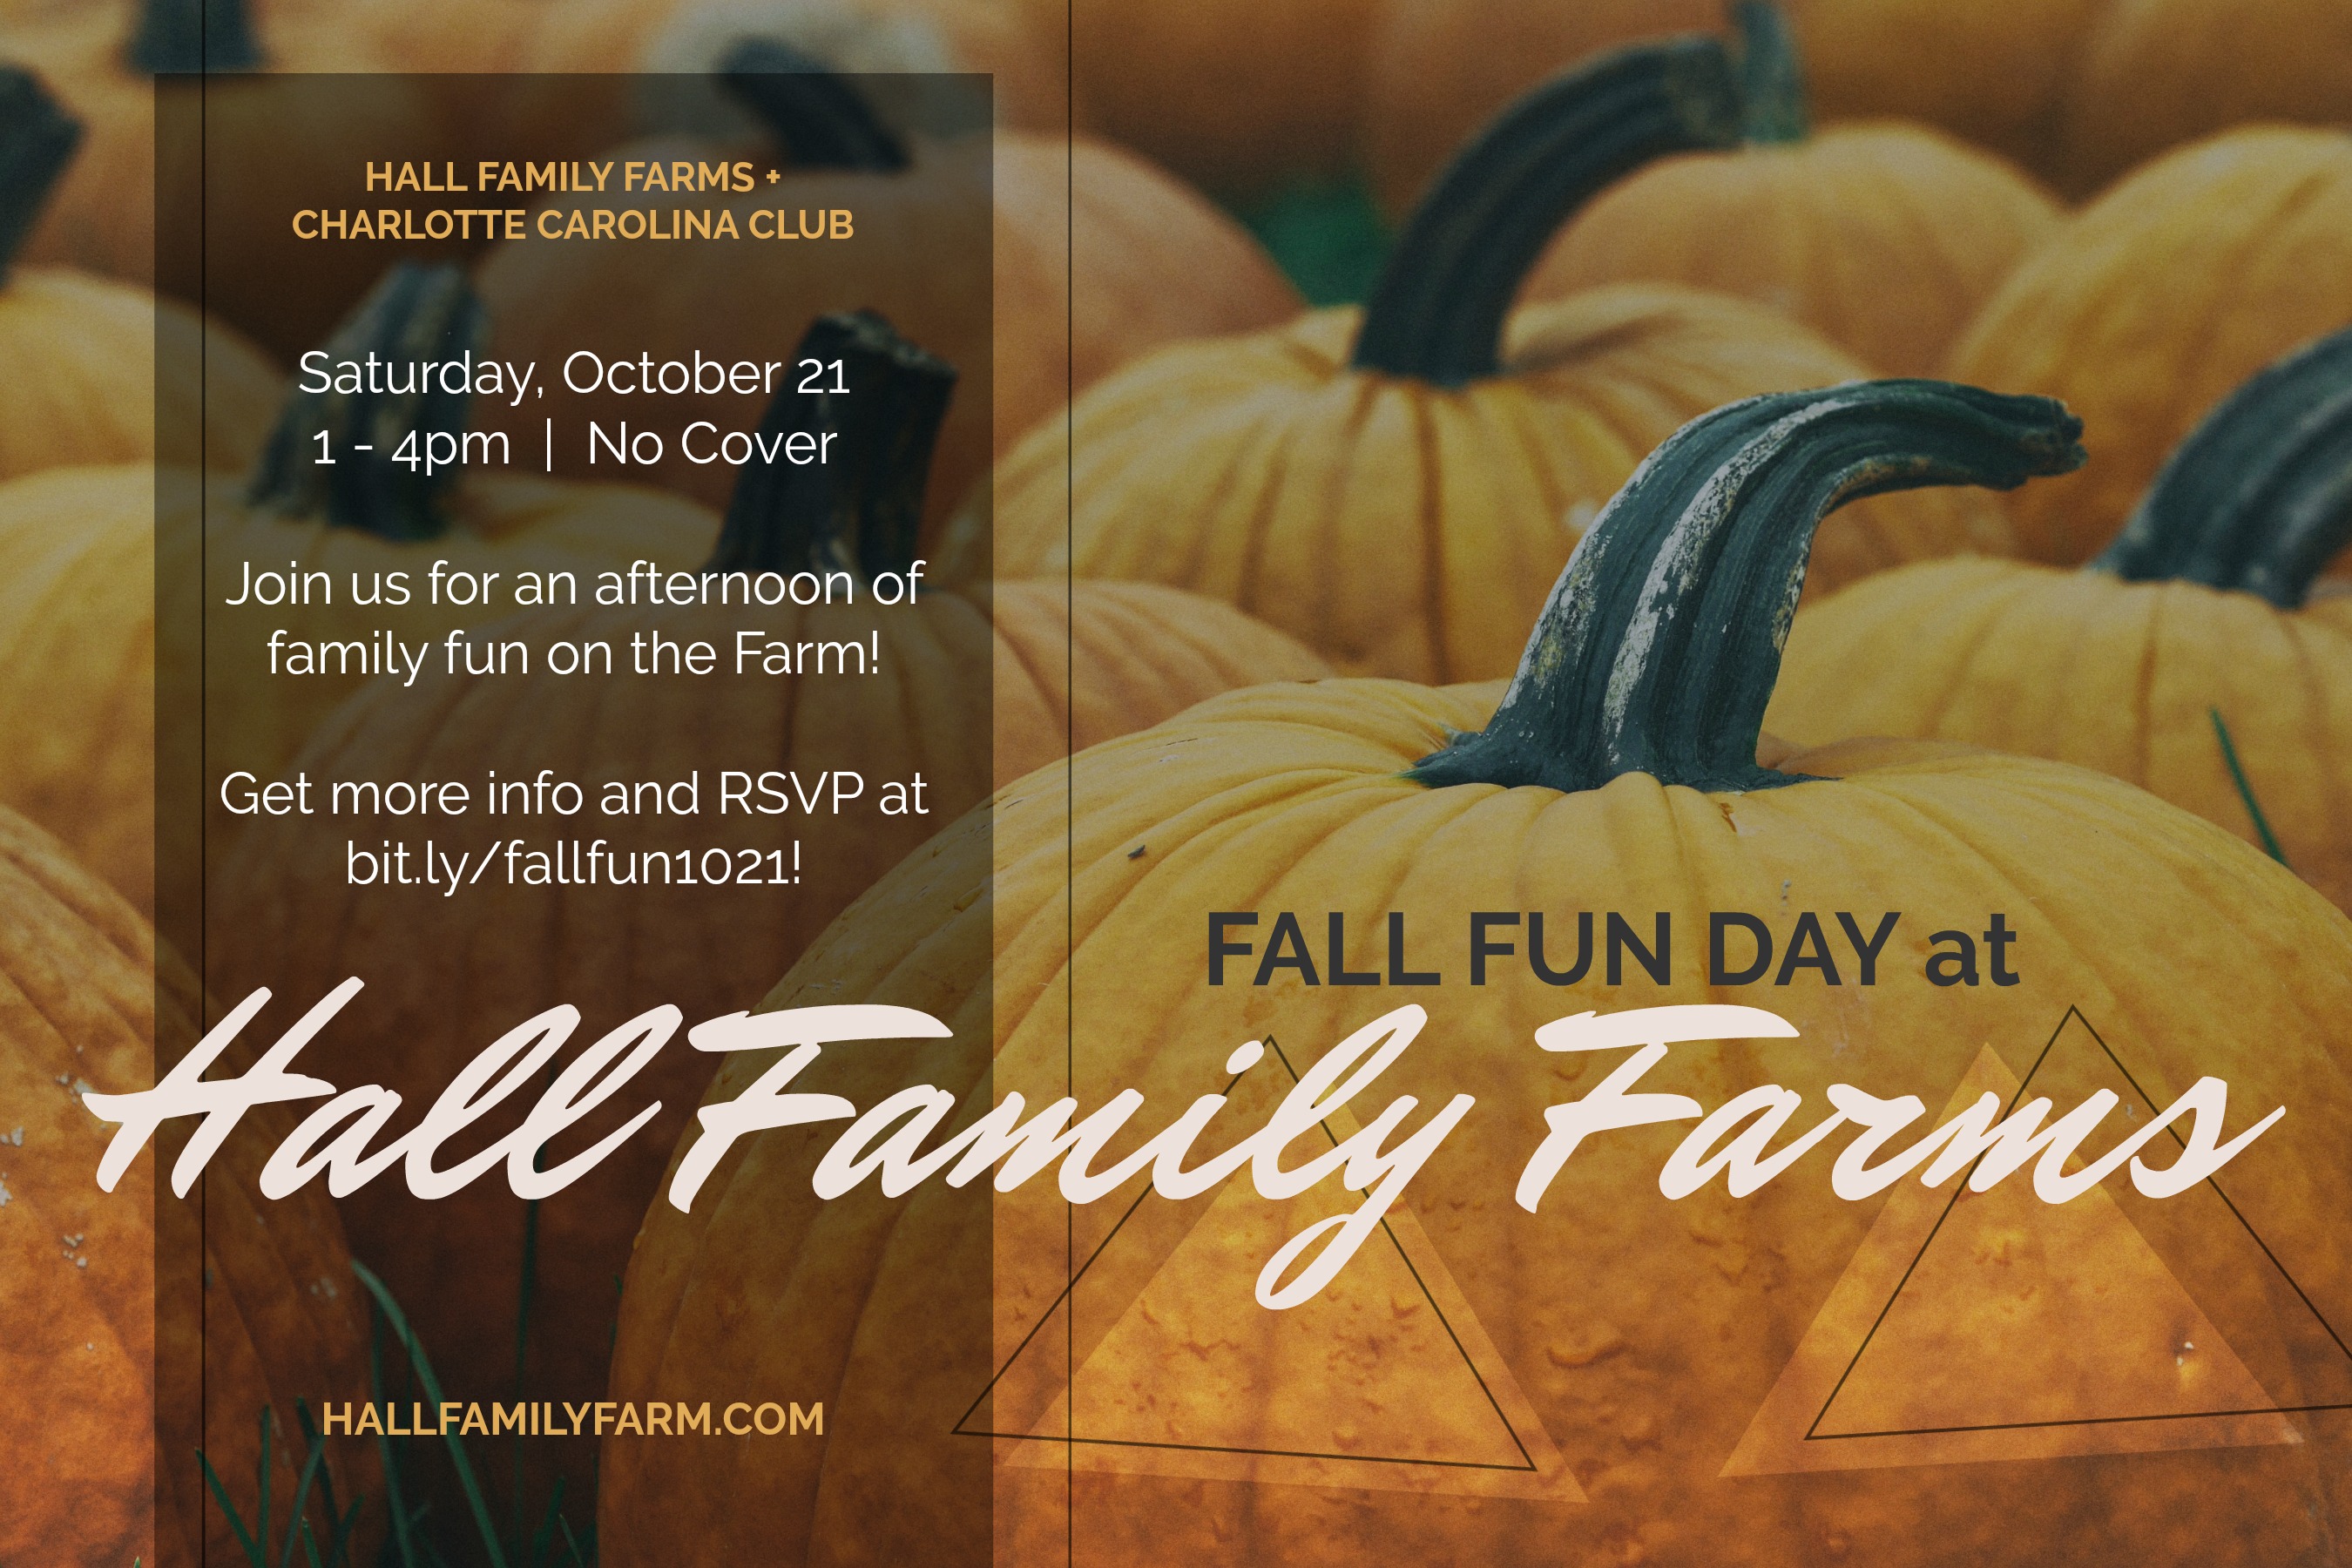 Fall Fun Day at Hall Family Farm (Oct 21)